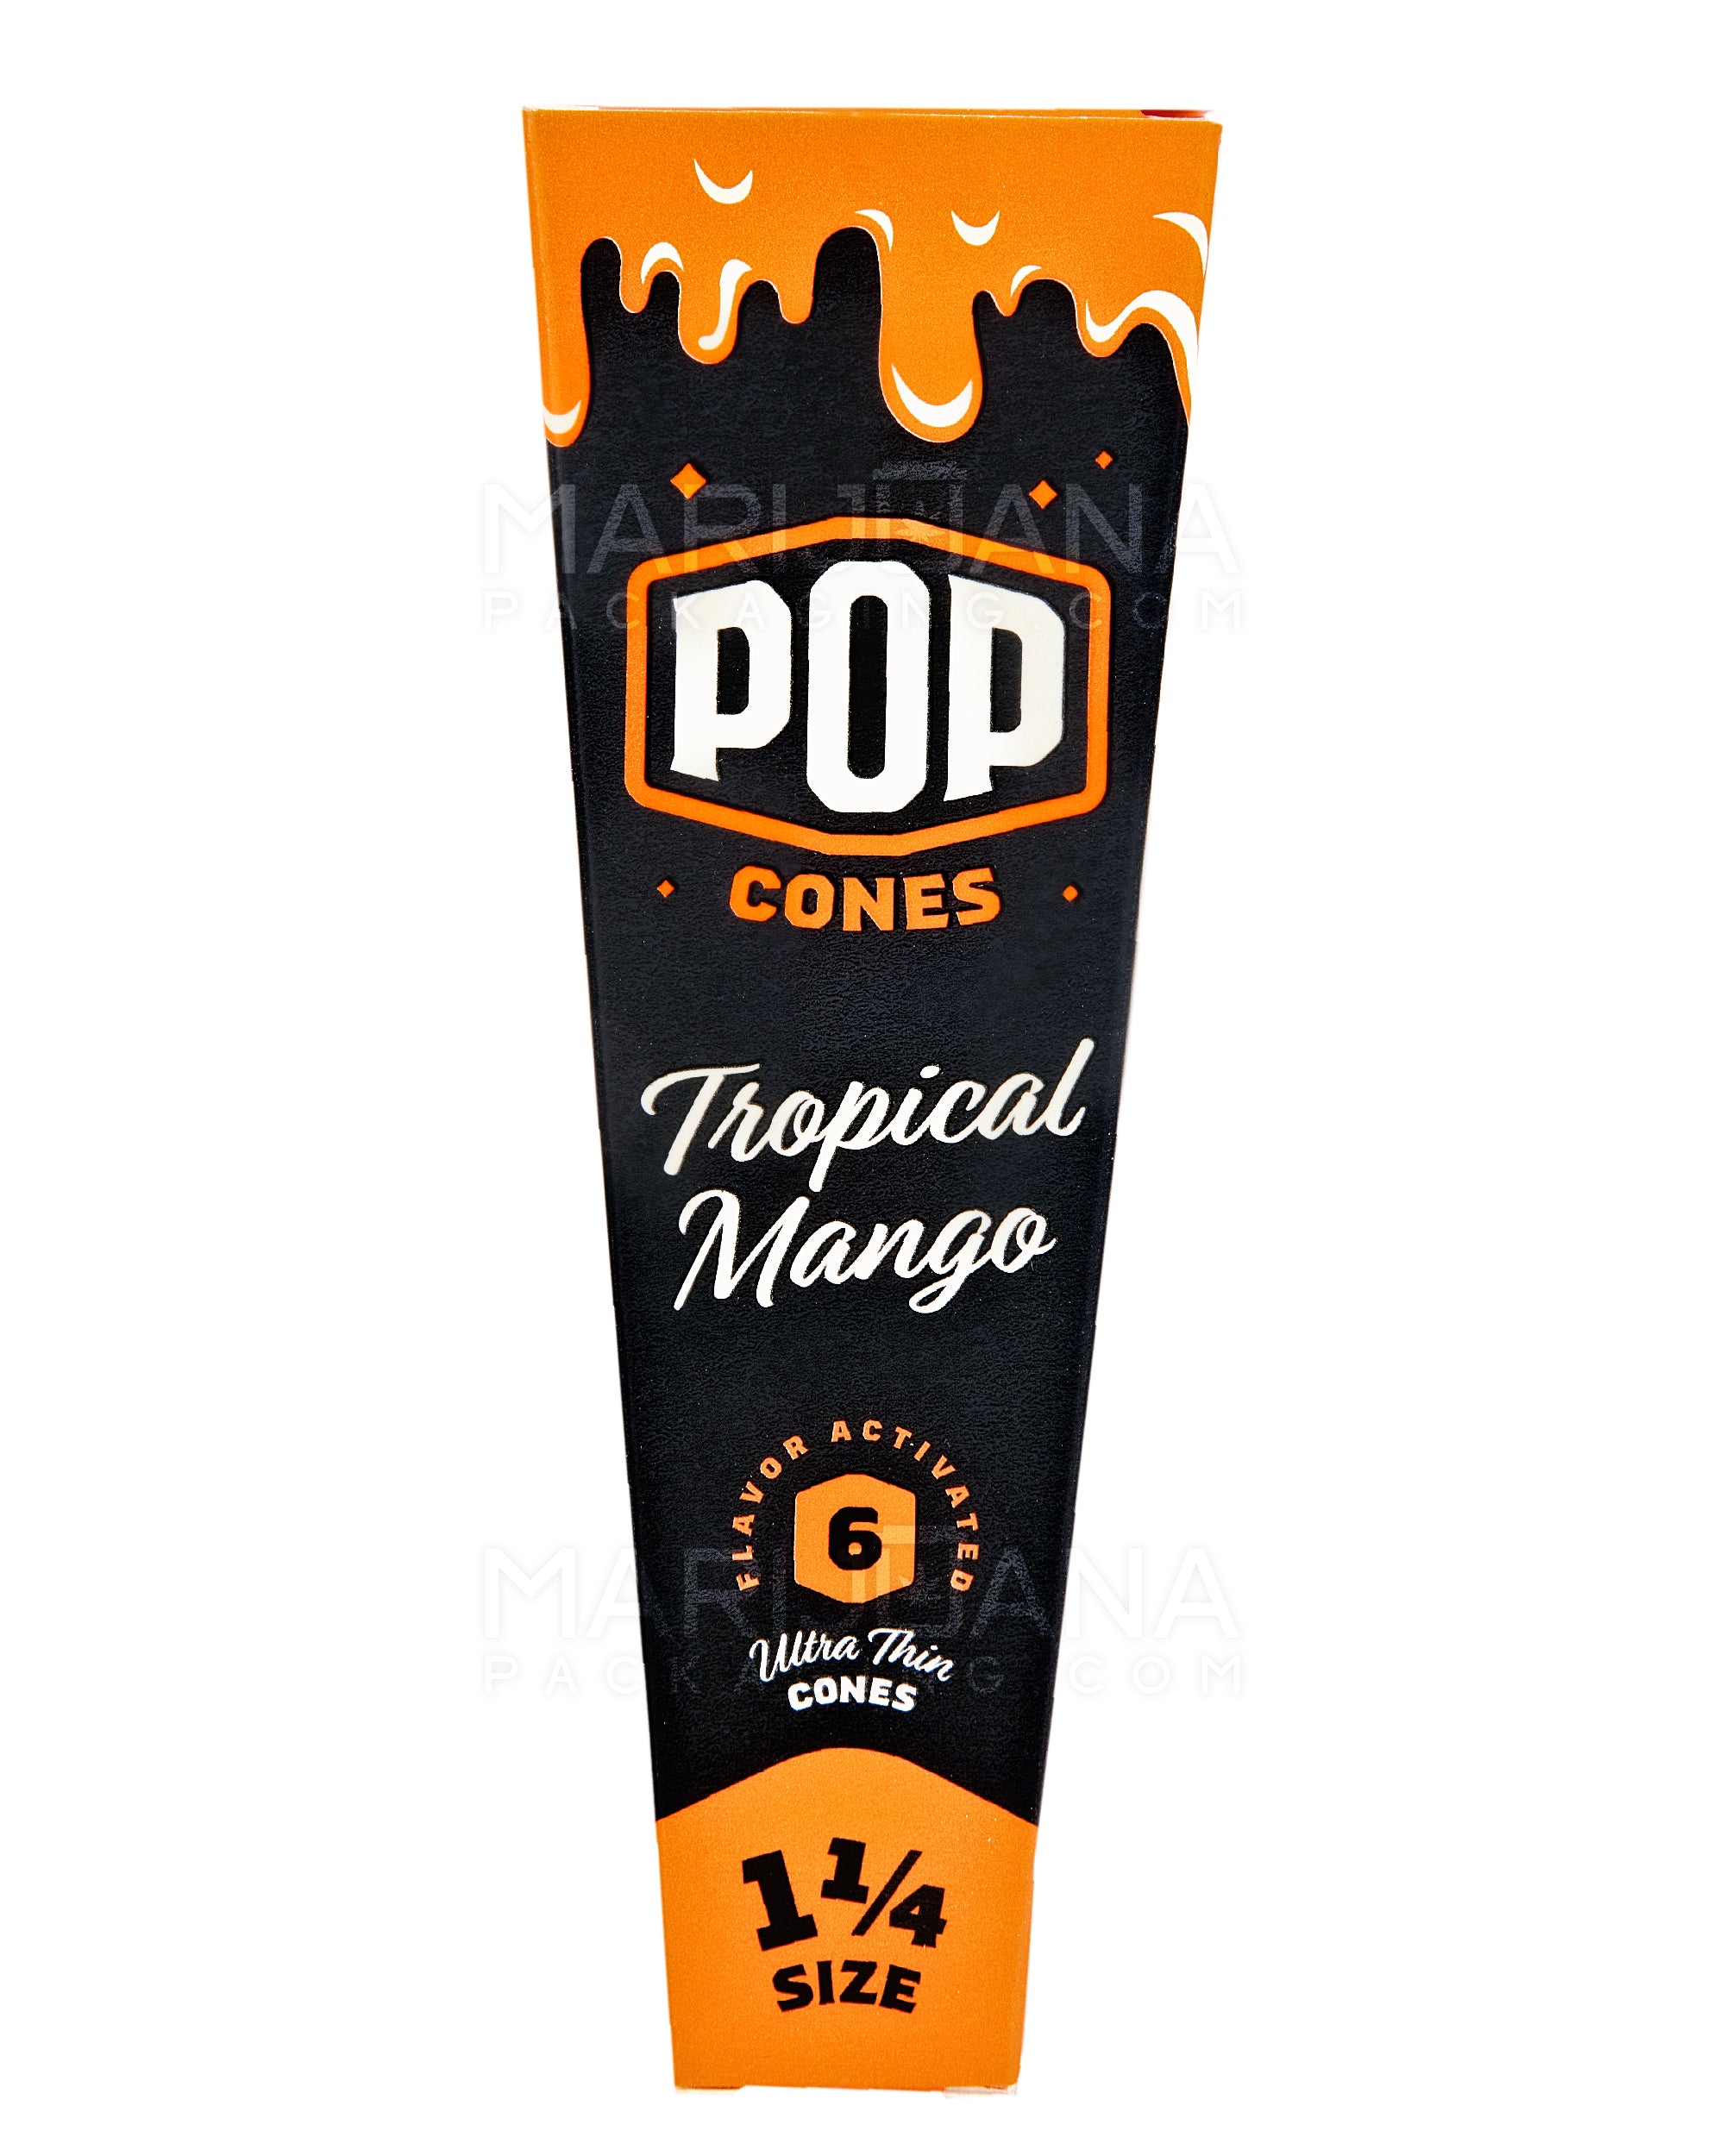 POP CONES | 'Retail Display' 1 1/4 Size Pre-Rolled Cones | 84mm - Tropical Mango - 24 Count - 2